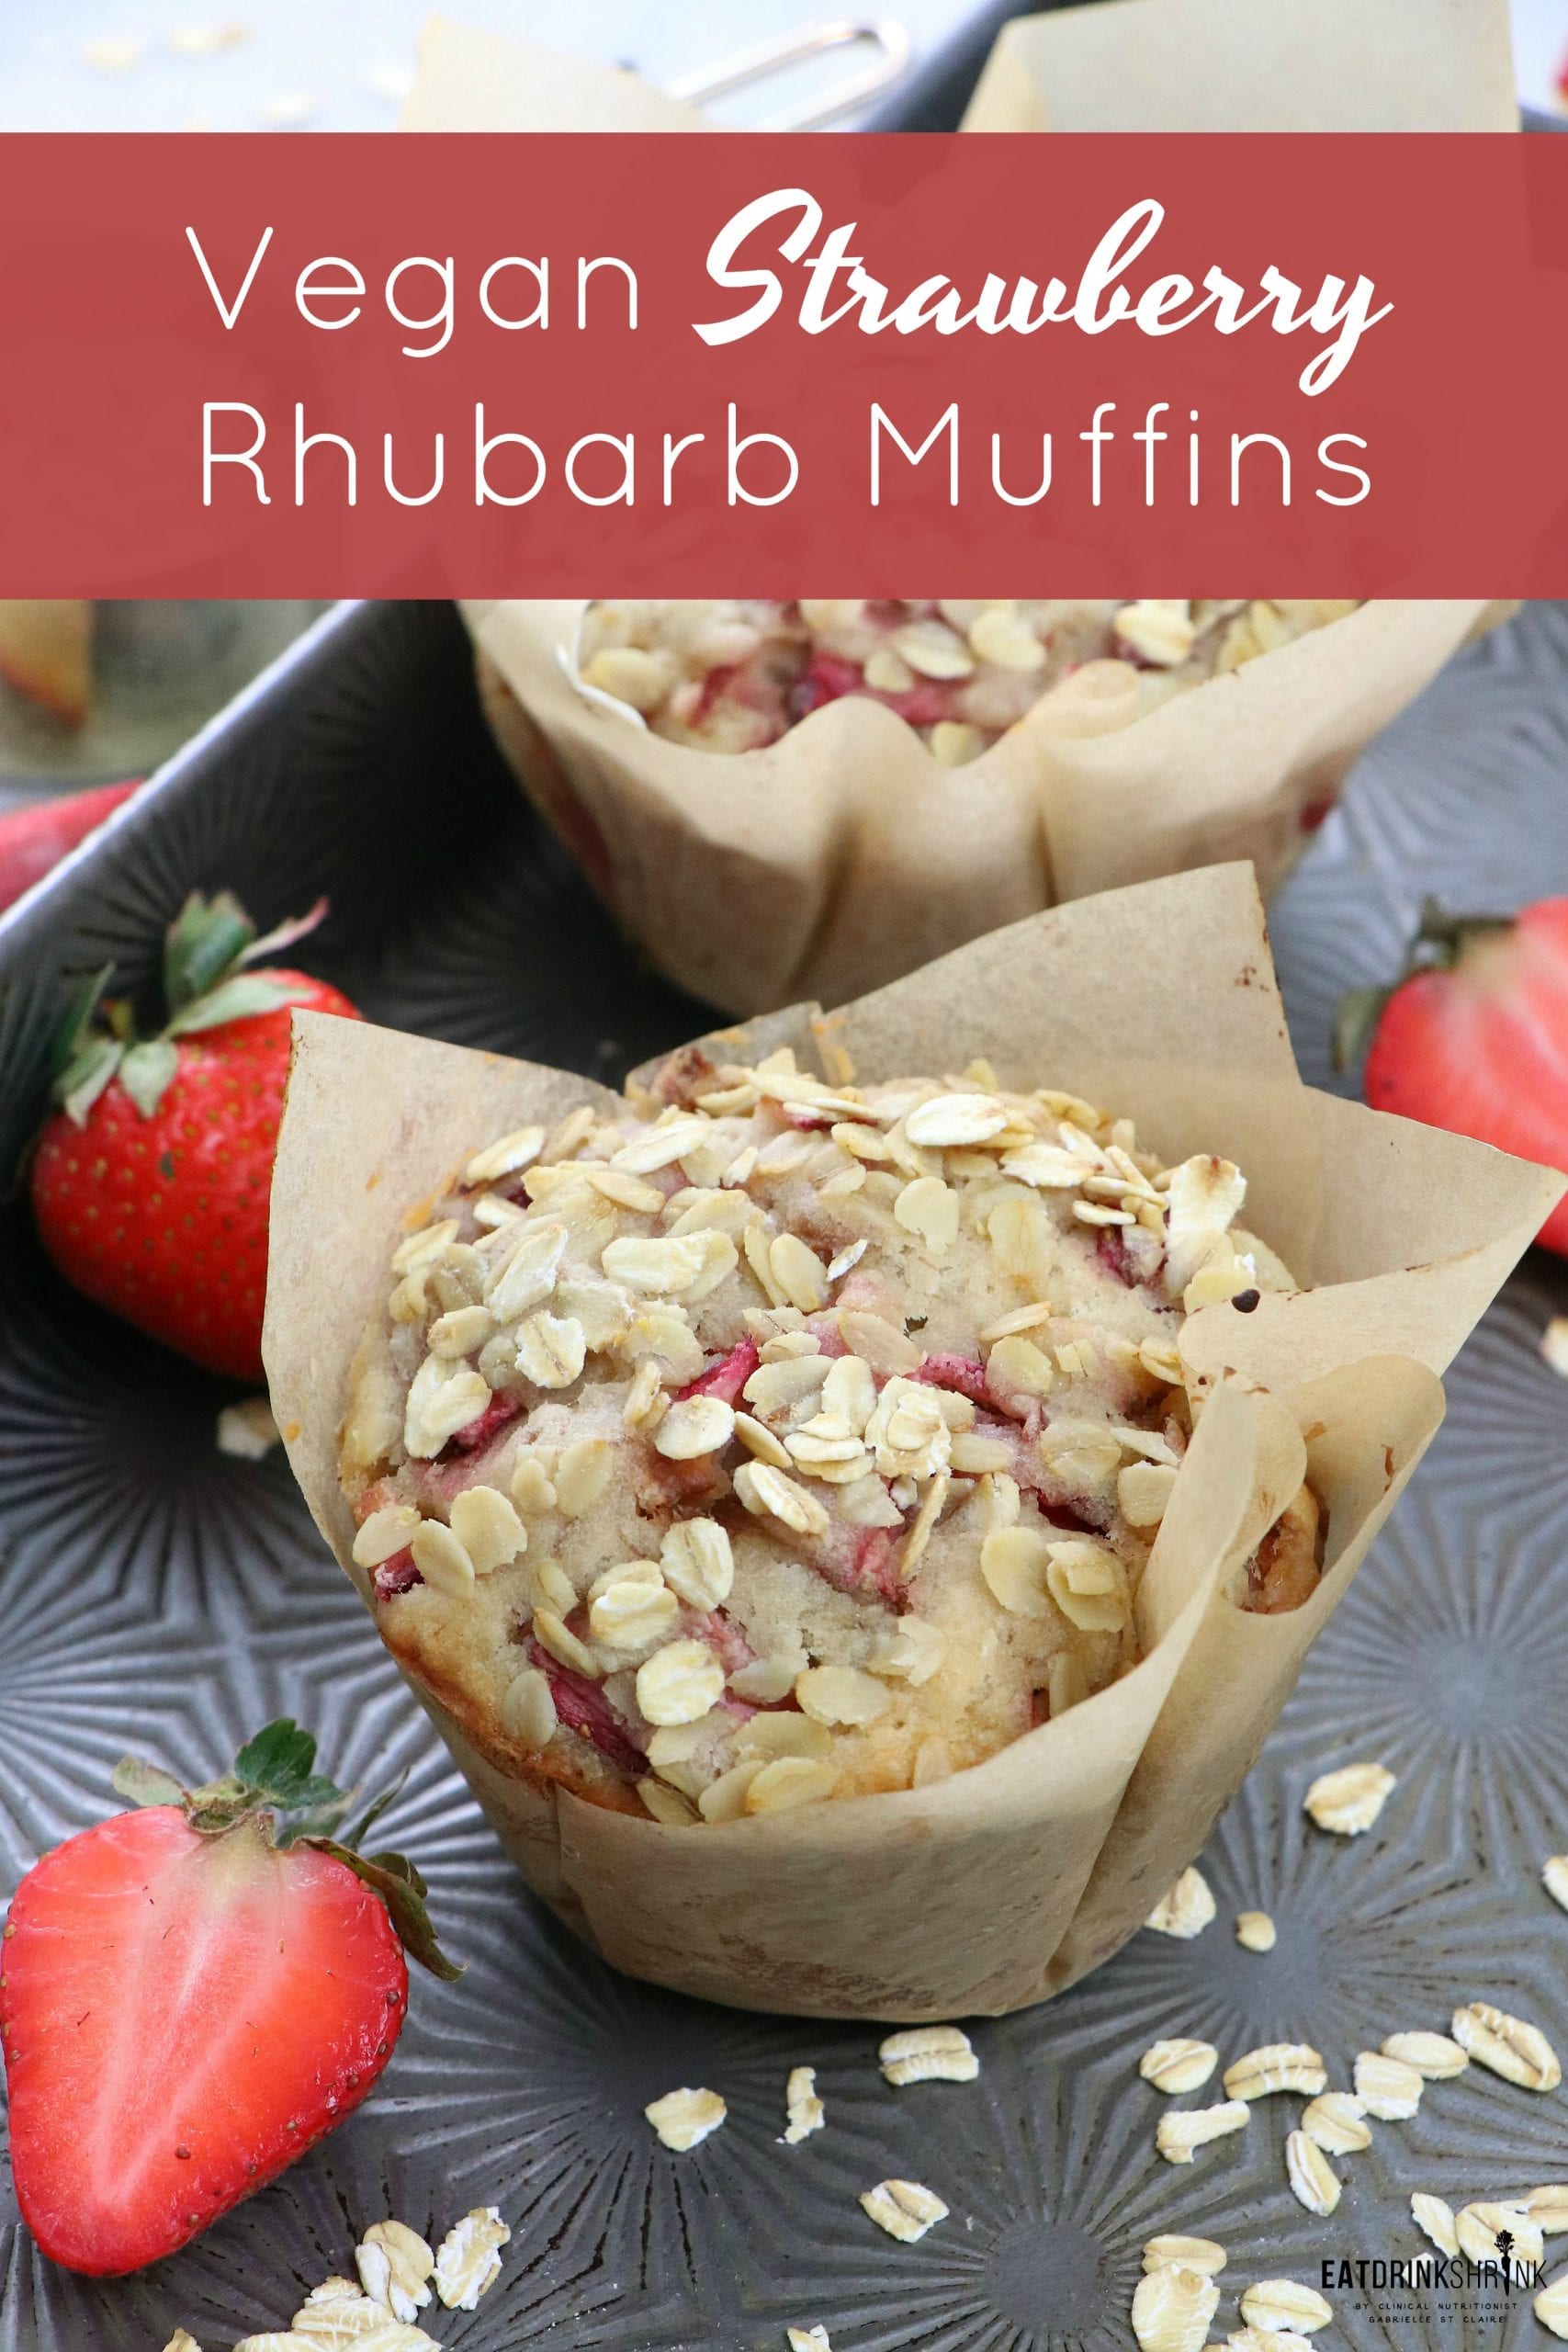 Vegan Strawberry Rhubarb Muffins - Resplendent Kitchen